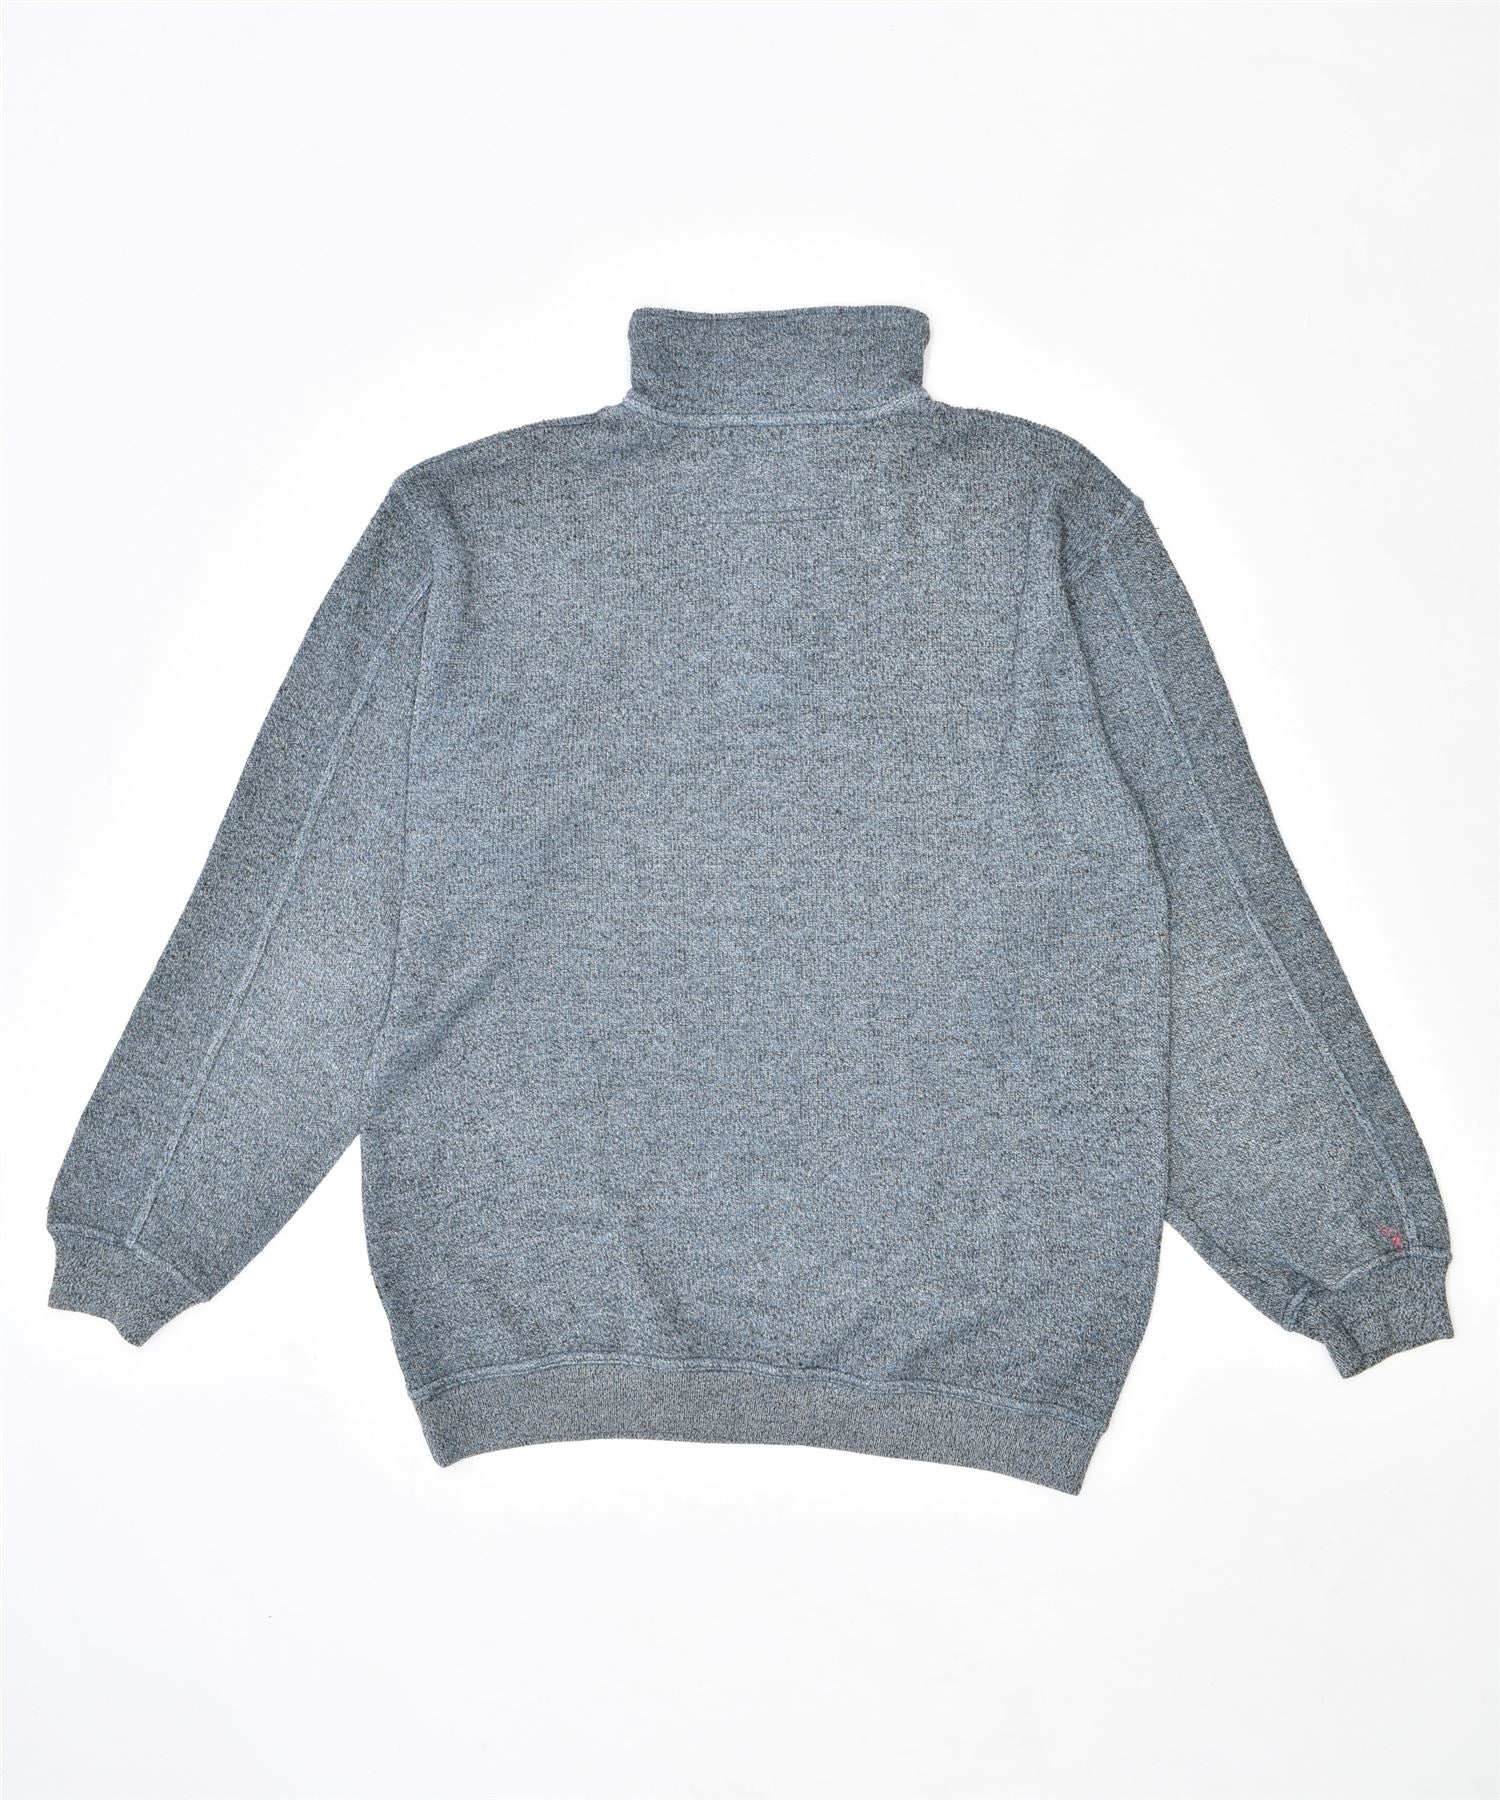 GREYSTONE Mens Zip Neck Jumper Sweater Large Blue Cotton Vintage, Vintage  & Second-Hand Clothing Online